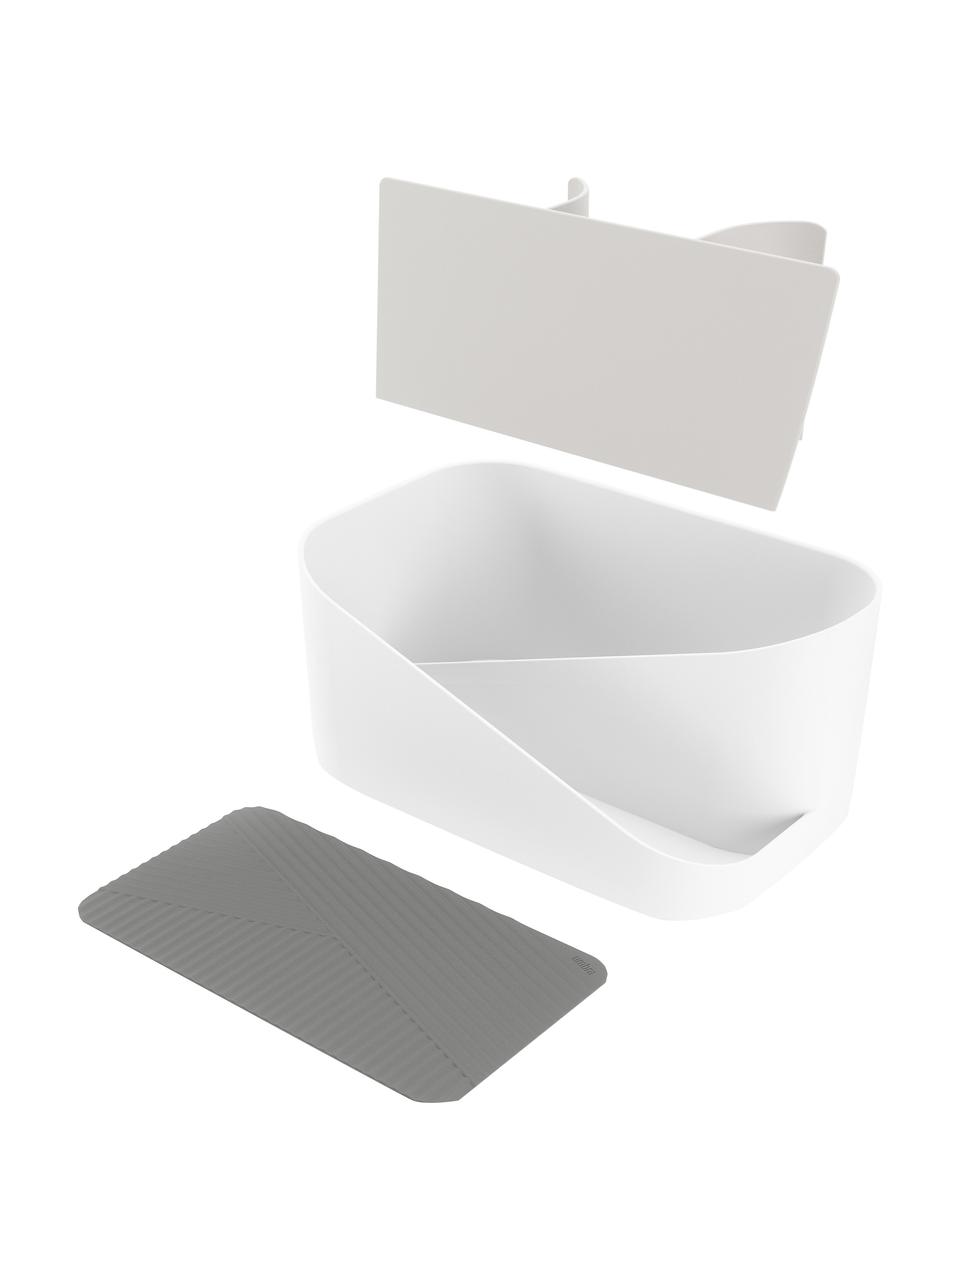 Organizer bianco Glam, Organizer: plastica, Bianco, grigio, Larg. 27 x Alt. 13 cm